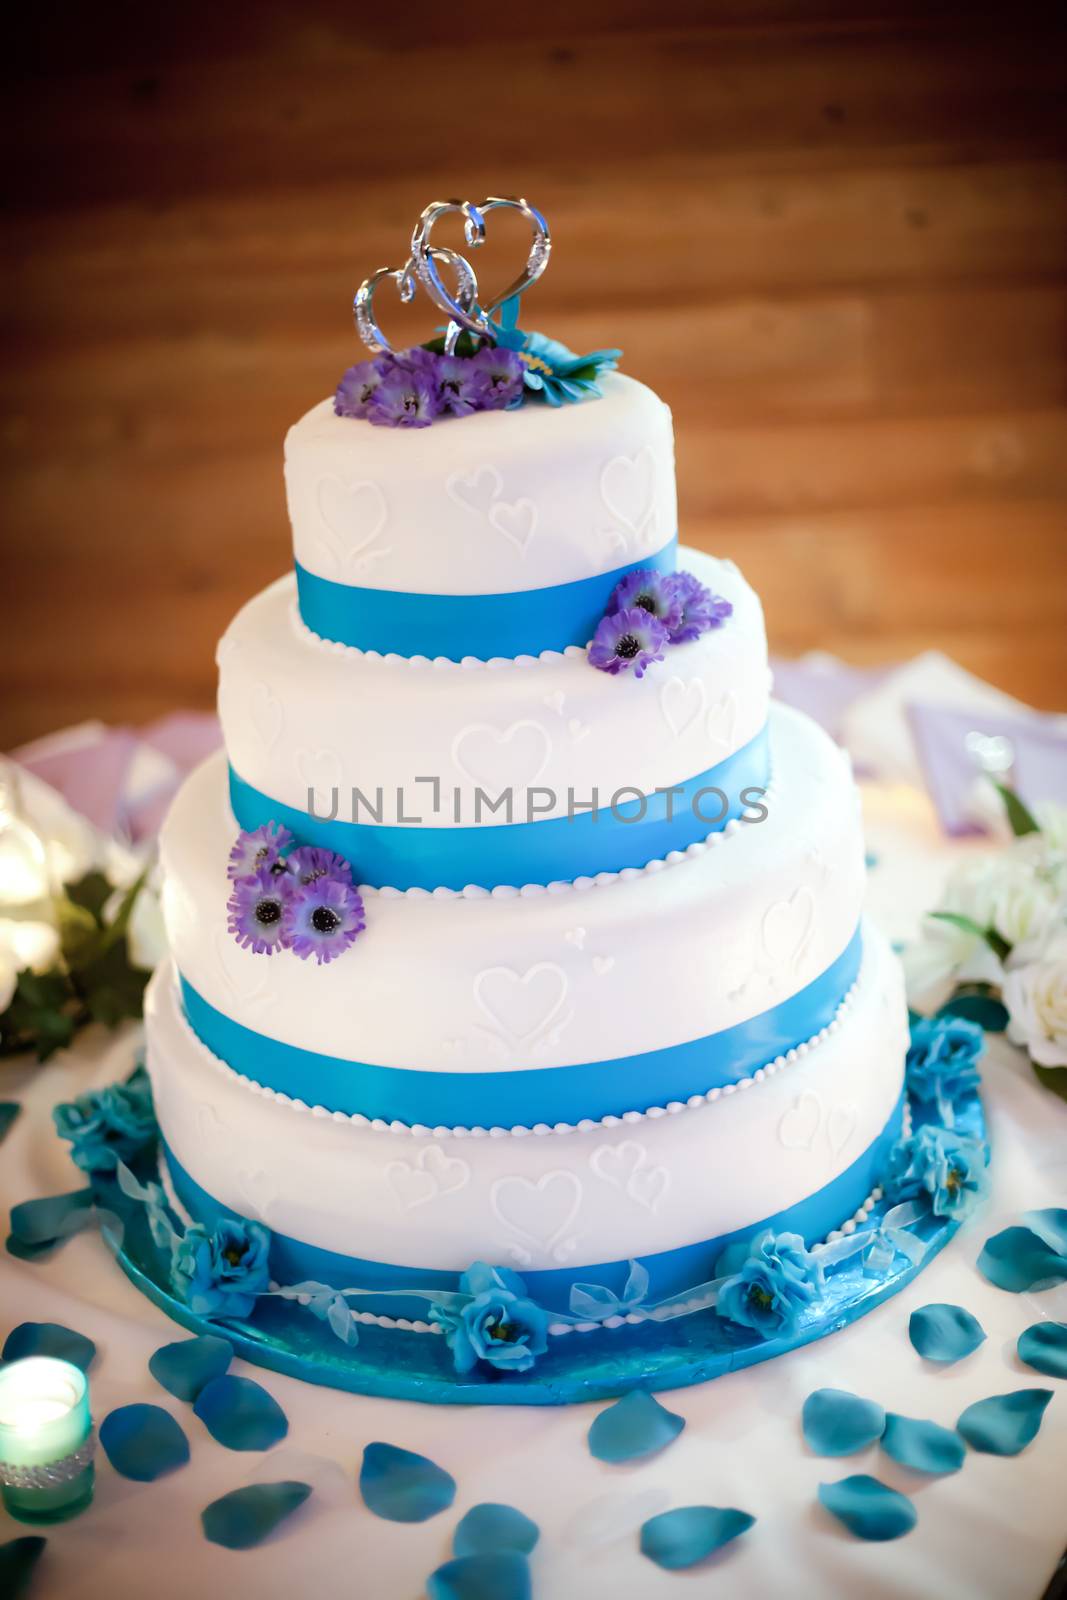 Beautiful wedding cake with vintage background.